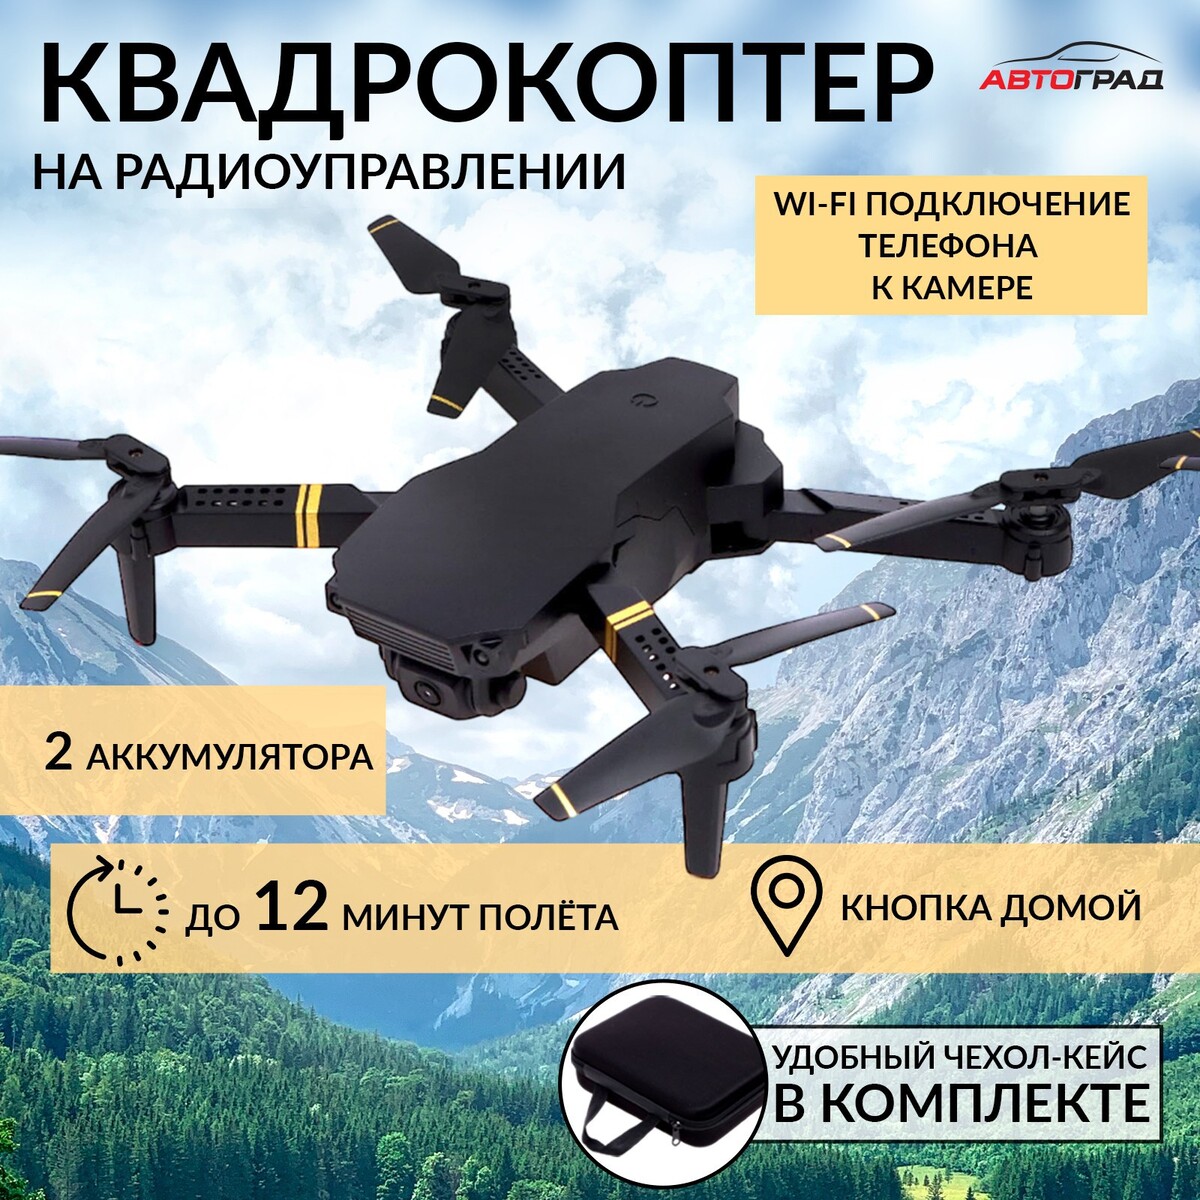 Квадрокоптер на радиоуправлении skydrone, камера 1080p, барометр,wi-fi, 2 аккумулятора, цвет черный Автоград